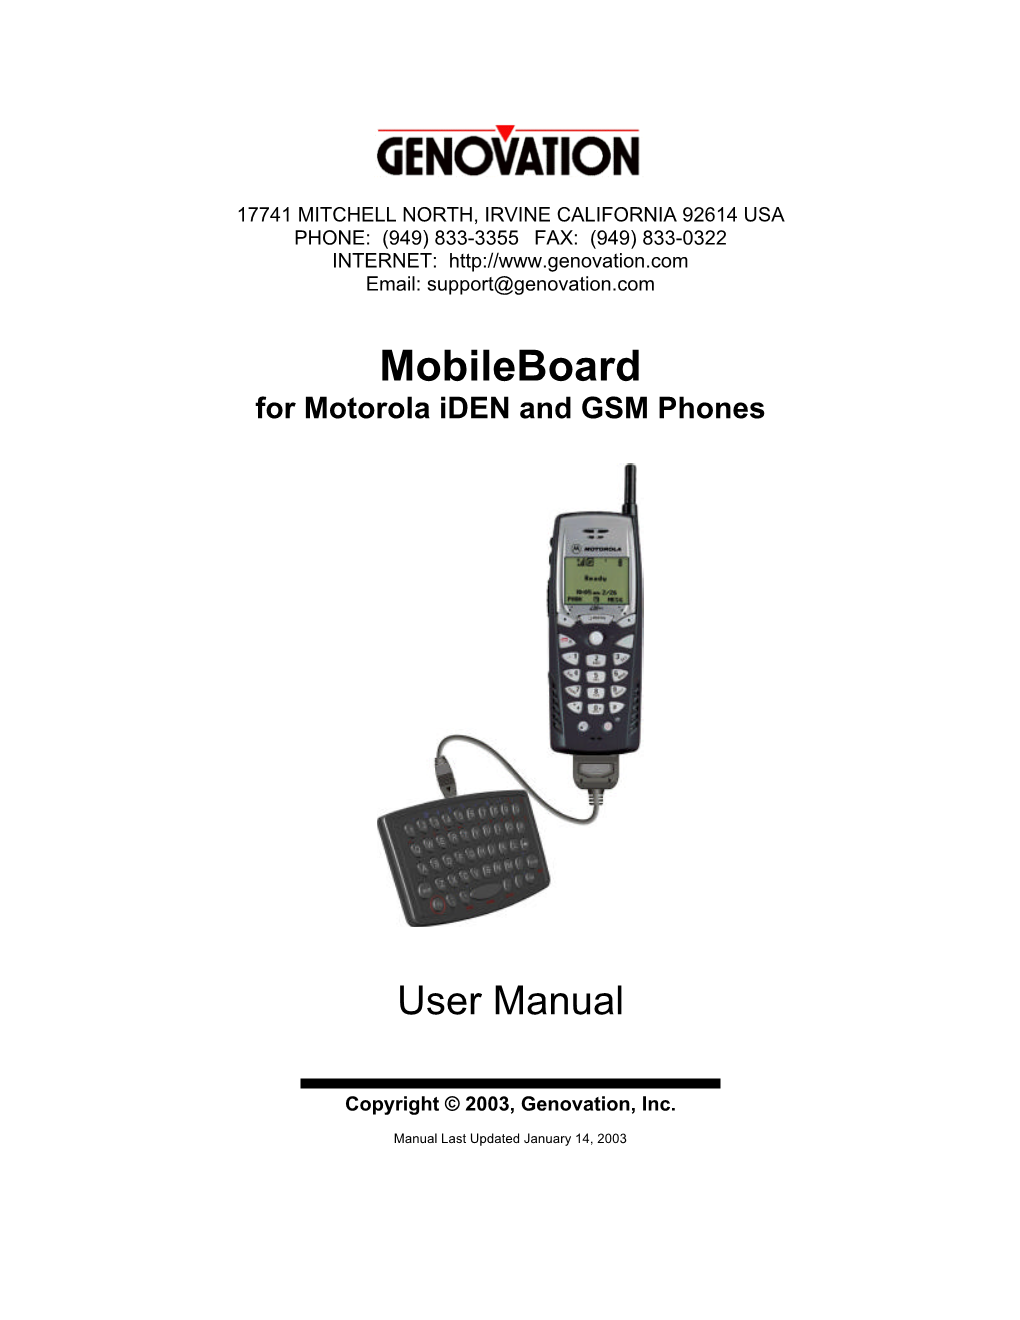 Mobileboard for Motorola Iden and GSM Phones